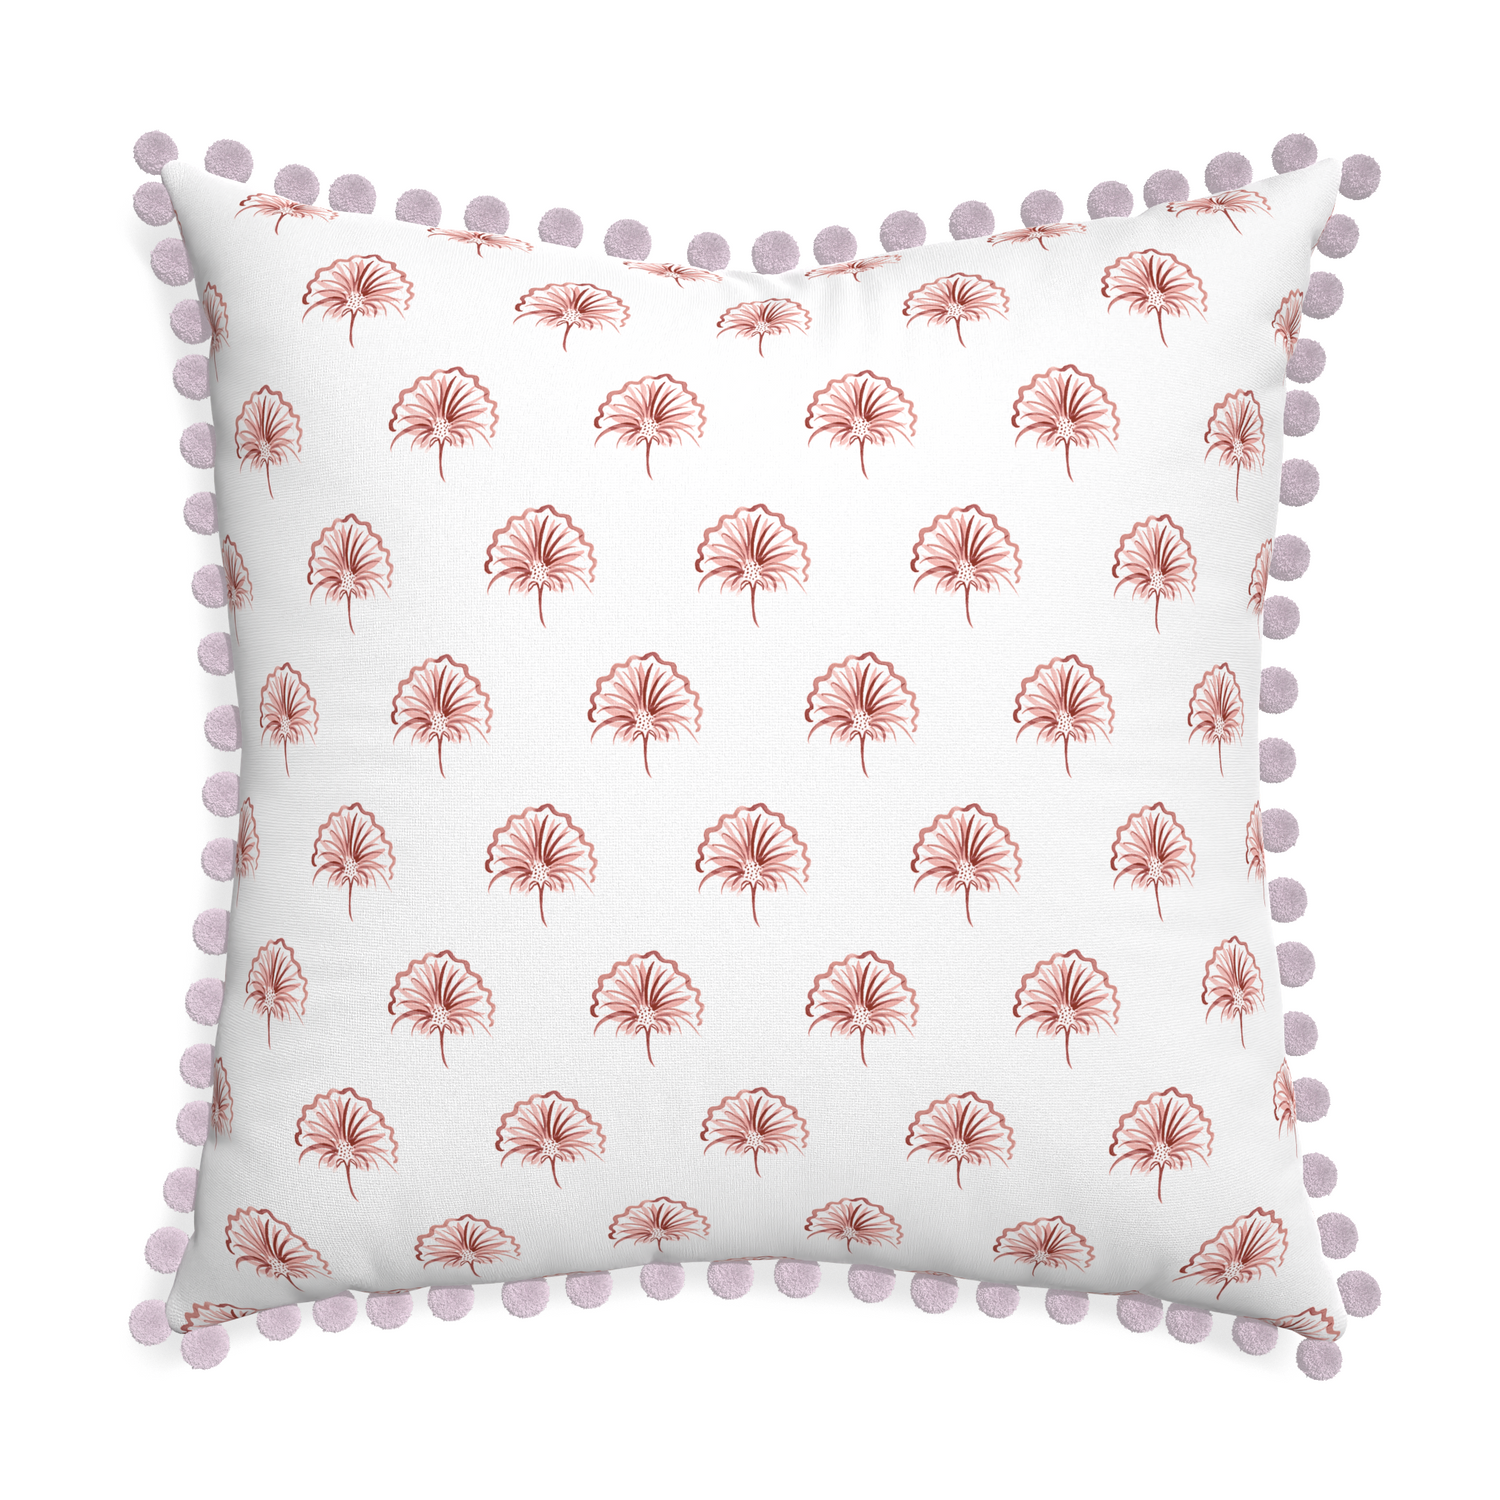 Euro-sham penelope rose custom pillow with l on white background